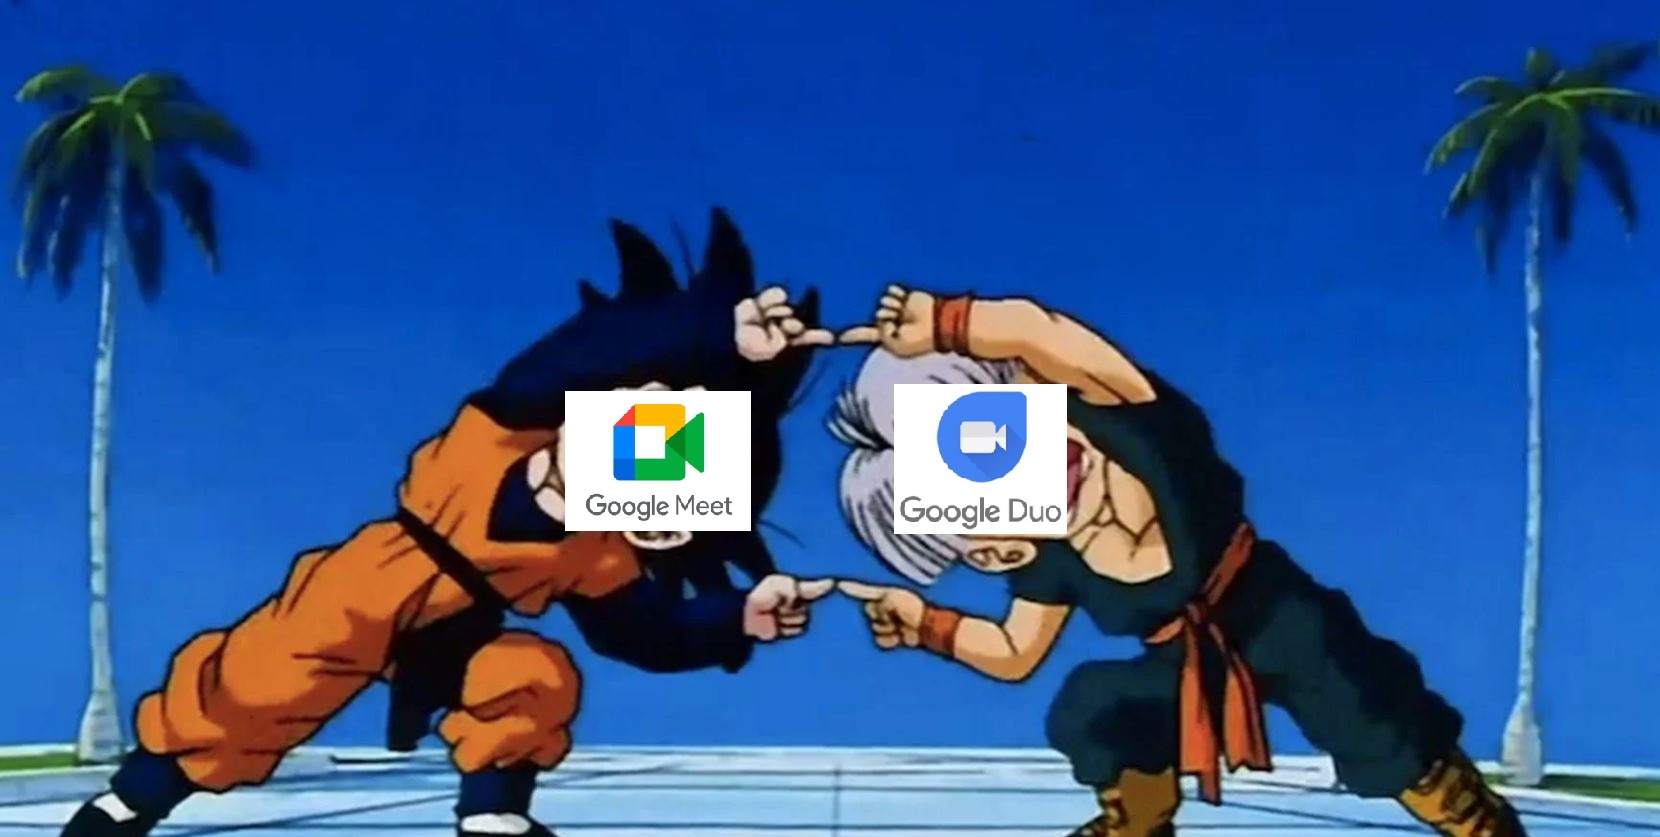 Google ประกาศรวมร่าง Google Duo และ Google Meet เป็นแอปเดียว!